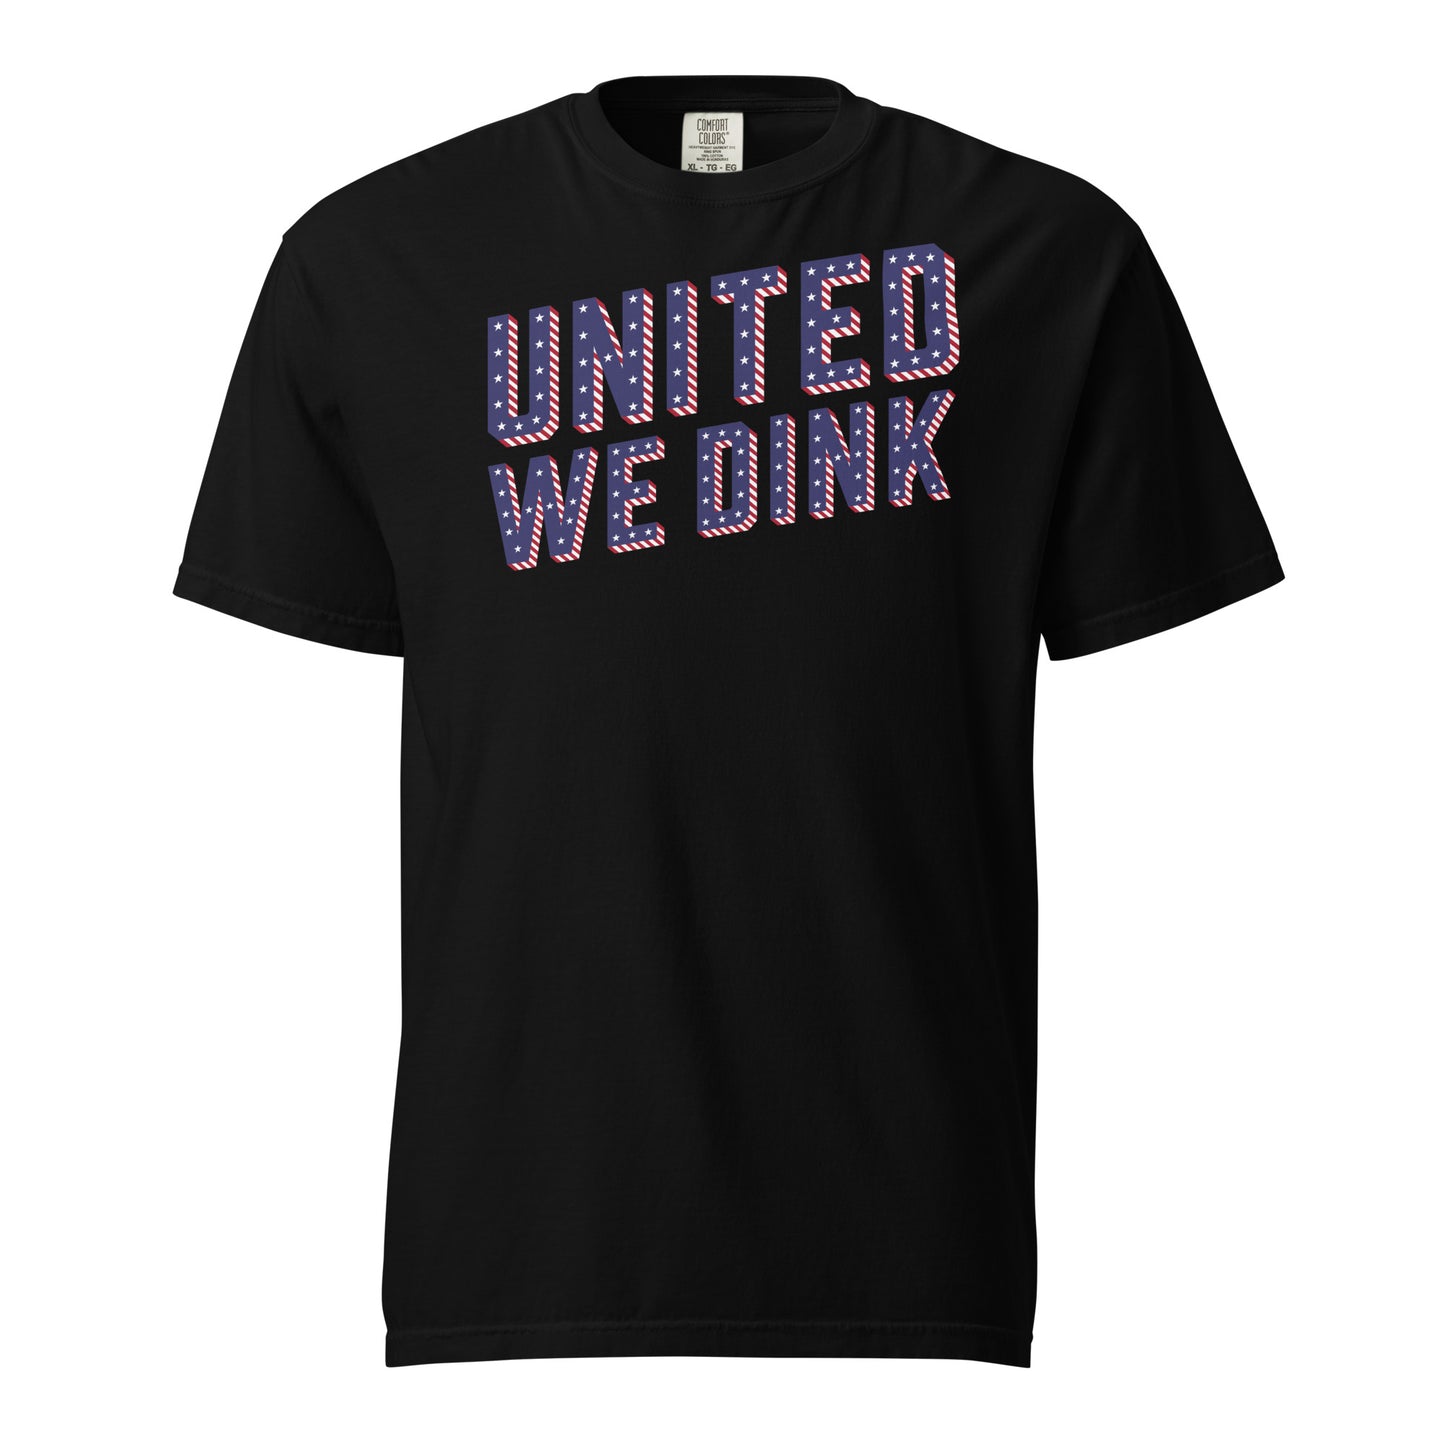 United We Dink Unisex garment-dyed heavyweight t-shirt